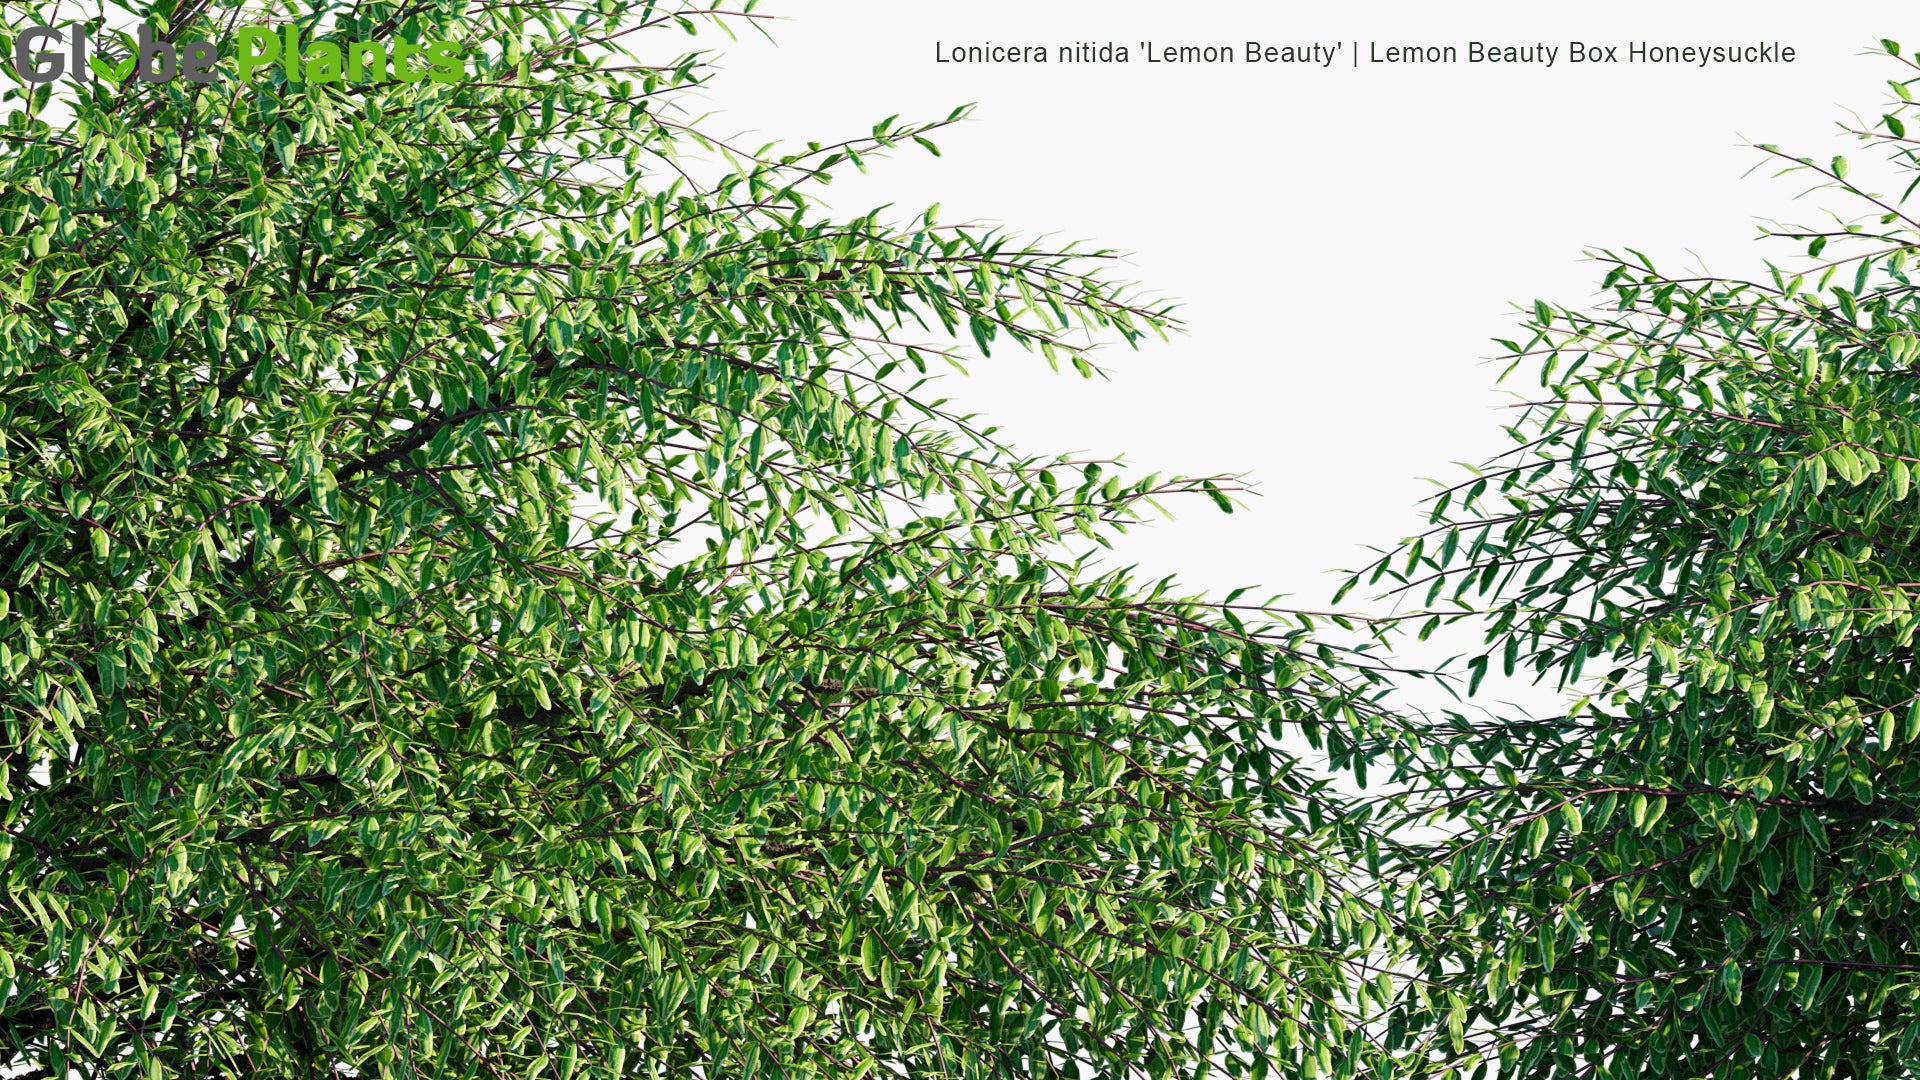 Lonicera Nitida 'Lemon Beauty' - Lemon Beauty Box Honeysuckle